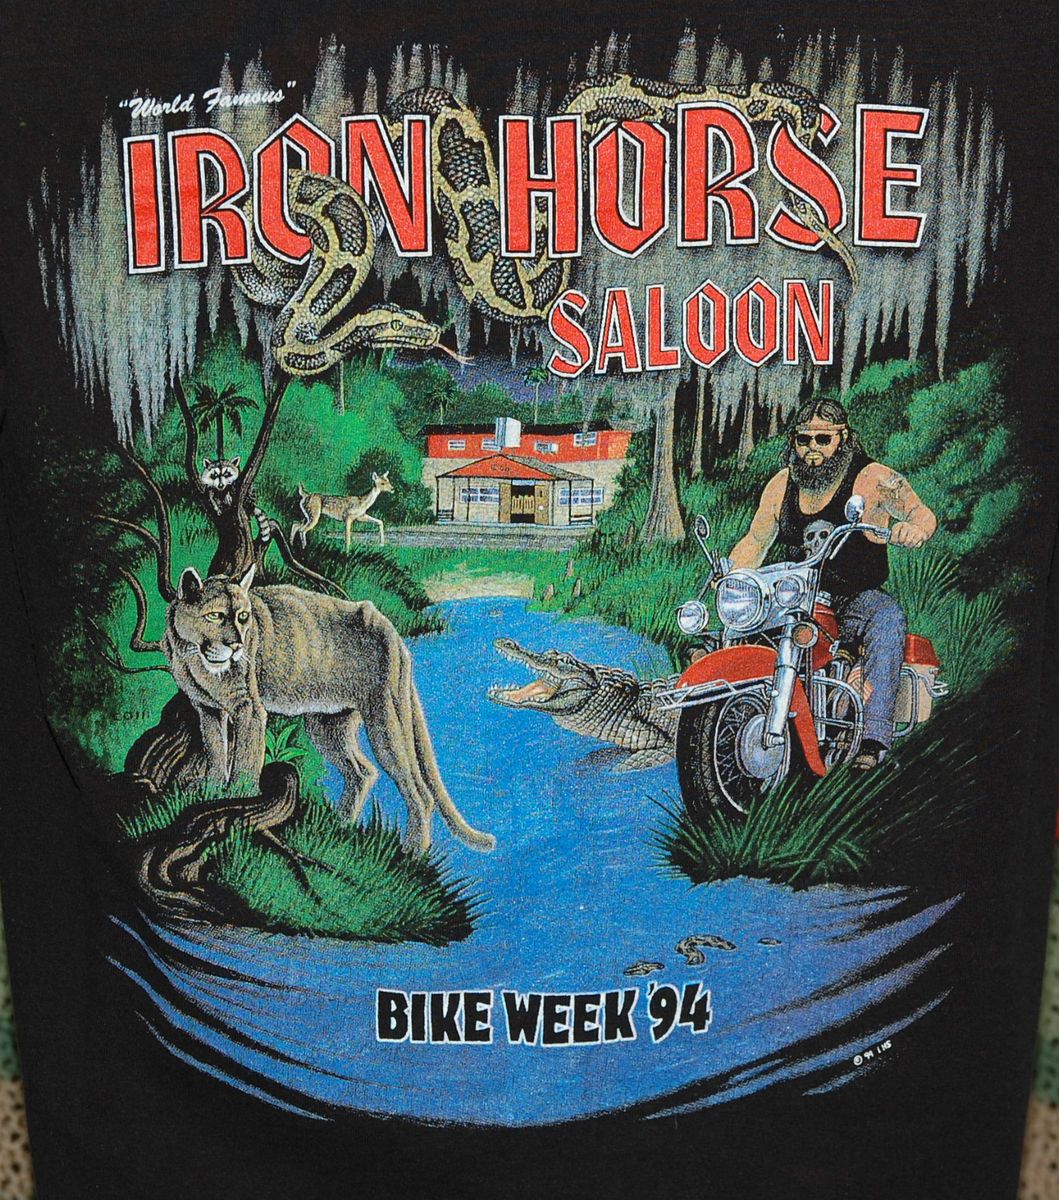 Vtg Iron Horse Saloon Shirt Bike Week 94 Harley Davidson Swamp Ride 